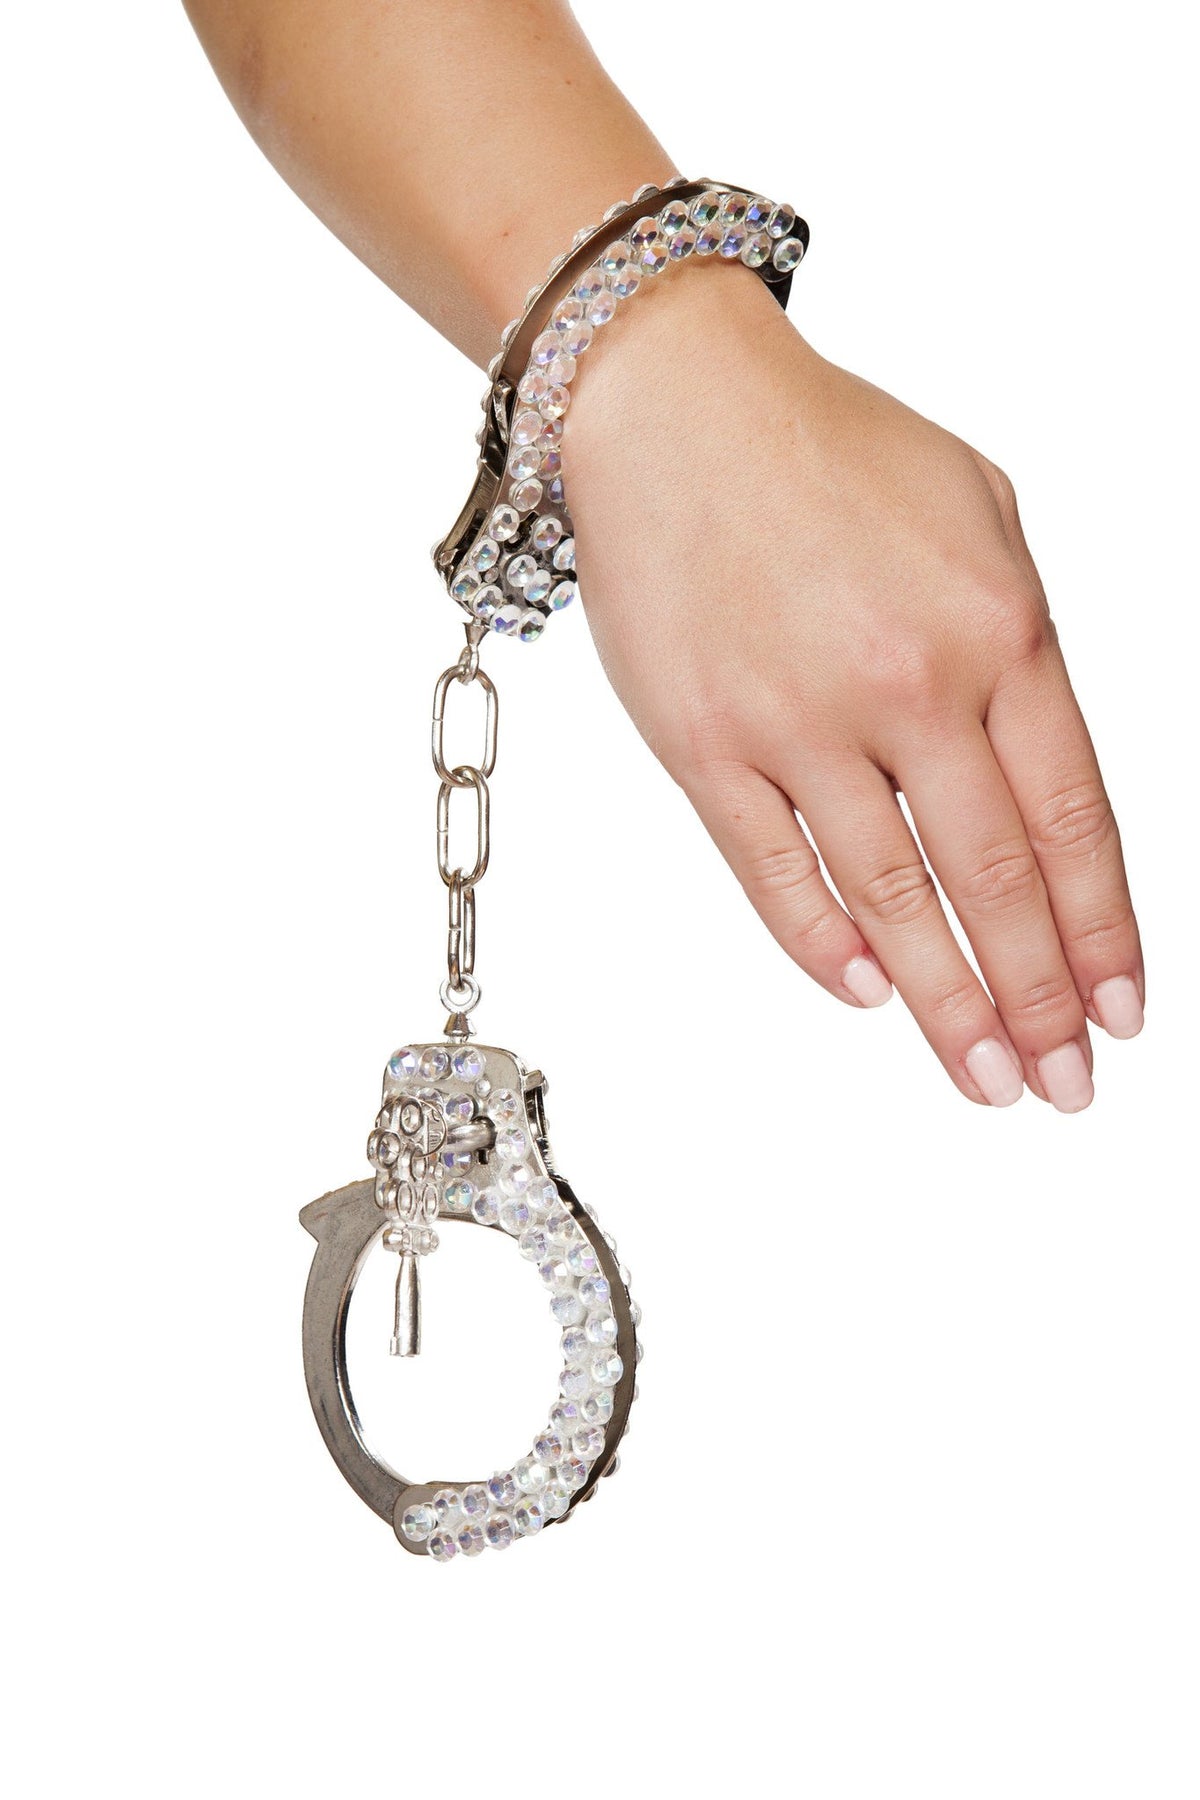 Silver Handcuffs with Rhinestones